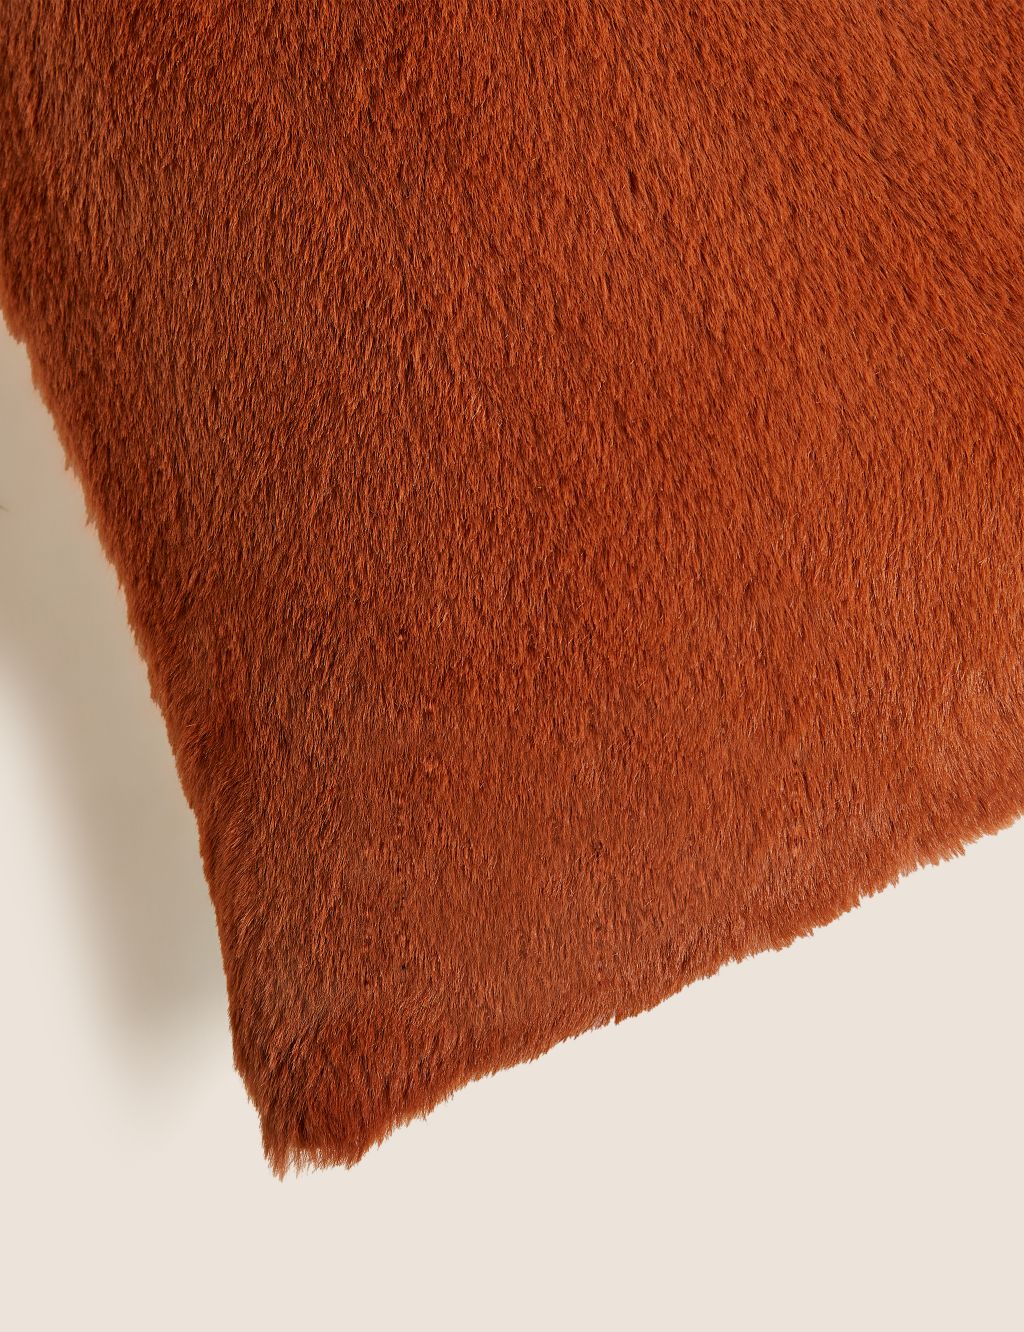 Supersoft Faux Fur Cushion image 5